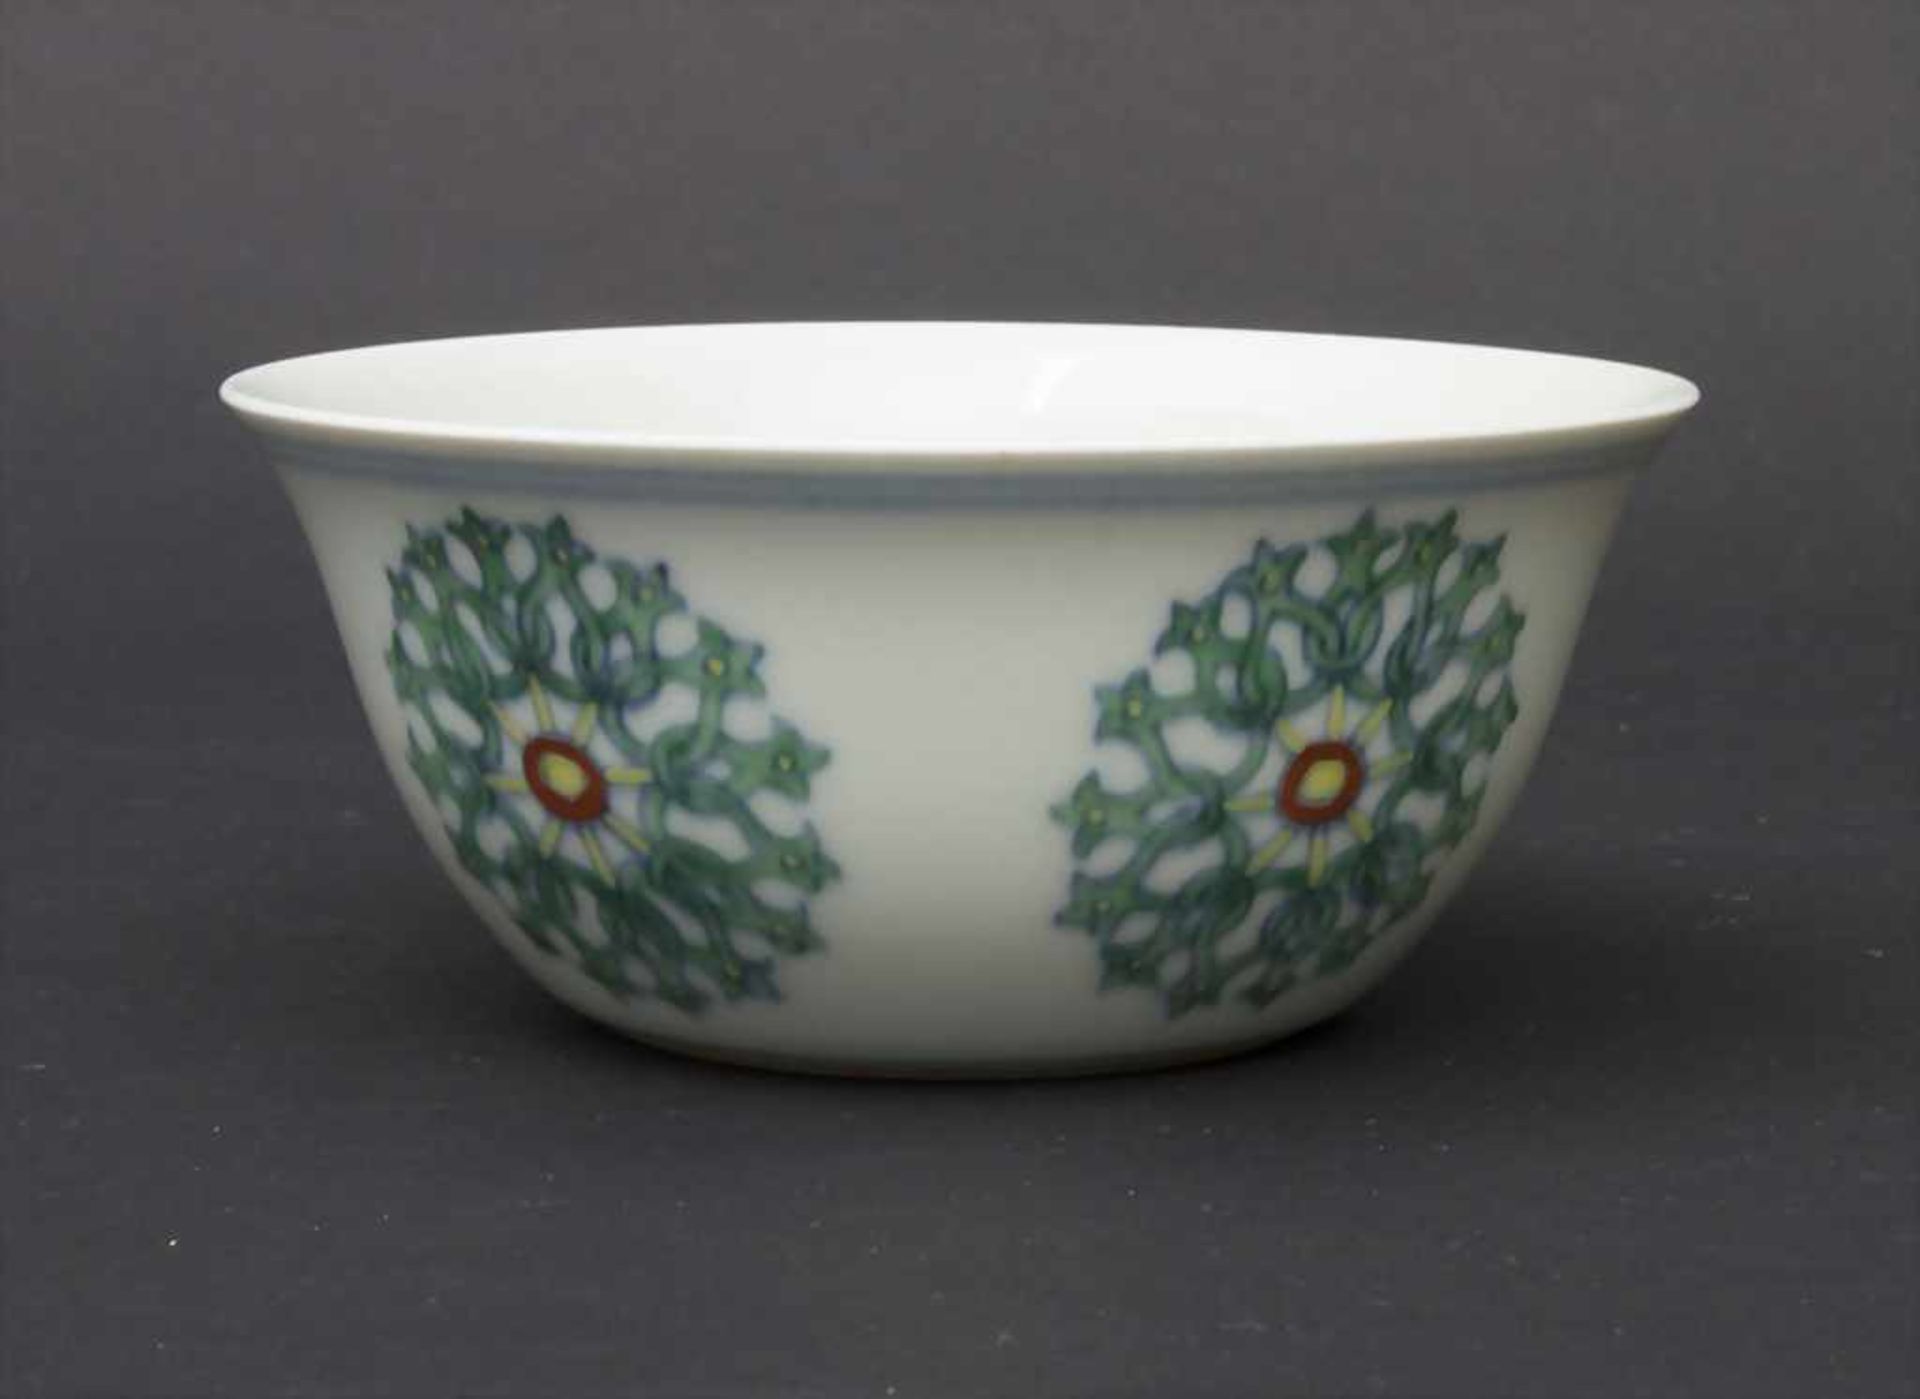 Kumme mit Blumenmedaillons / A bowl with flower medallionsMaterial: Porzellan, mit Emailfarben